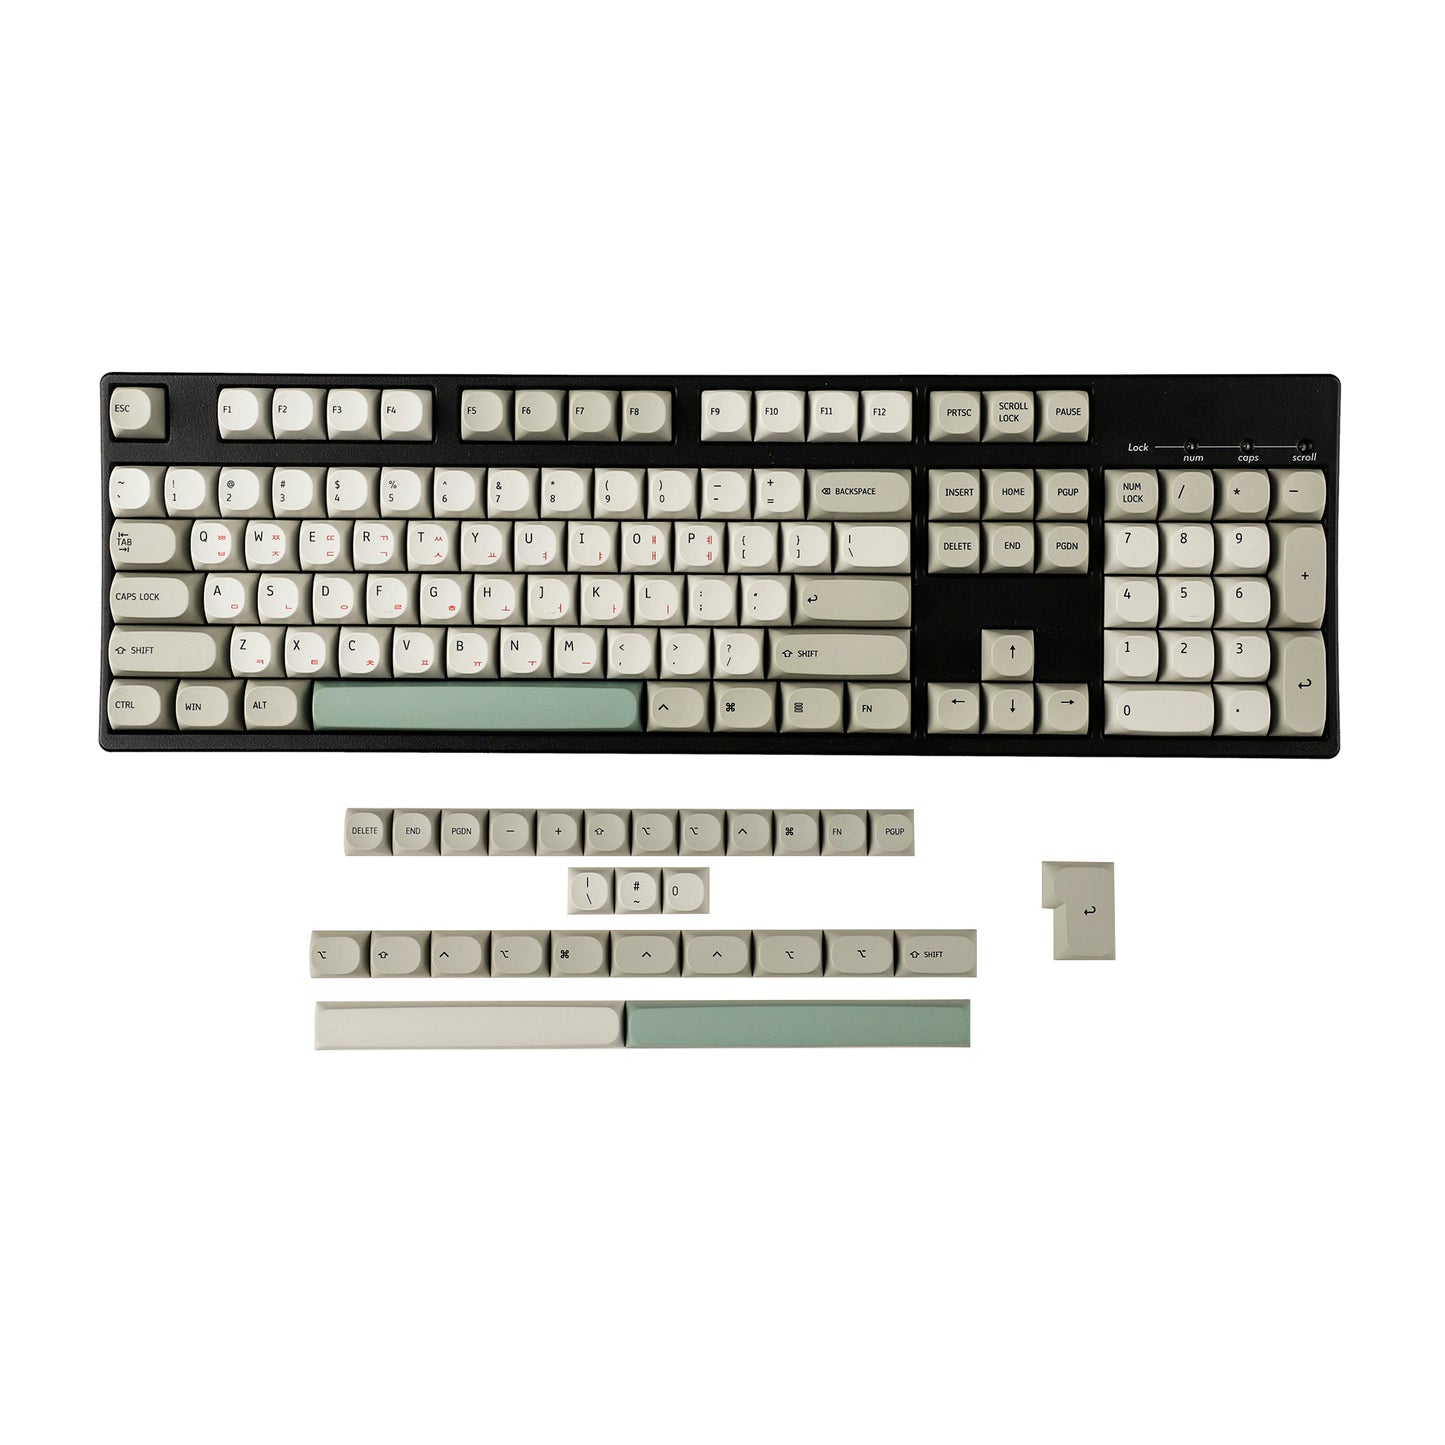 YMDK 132 MA Dye Sub 9009 Retro PBT Japanese Korean Keycaps Mac Style For MX Mechanical Keyboard Filco 104 TKL 61 68 75 84 96 104